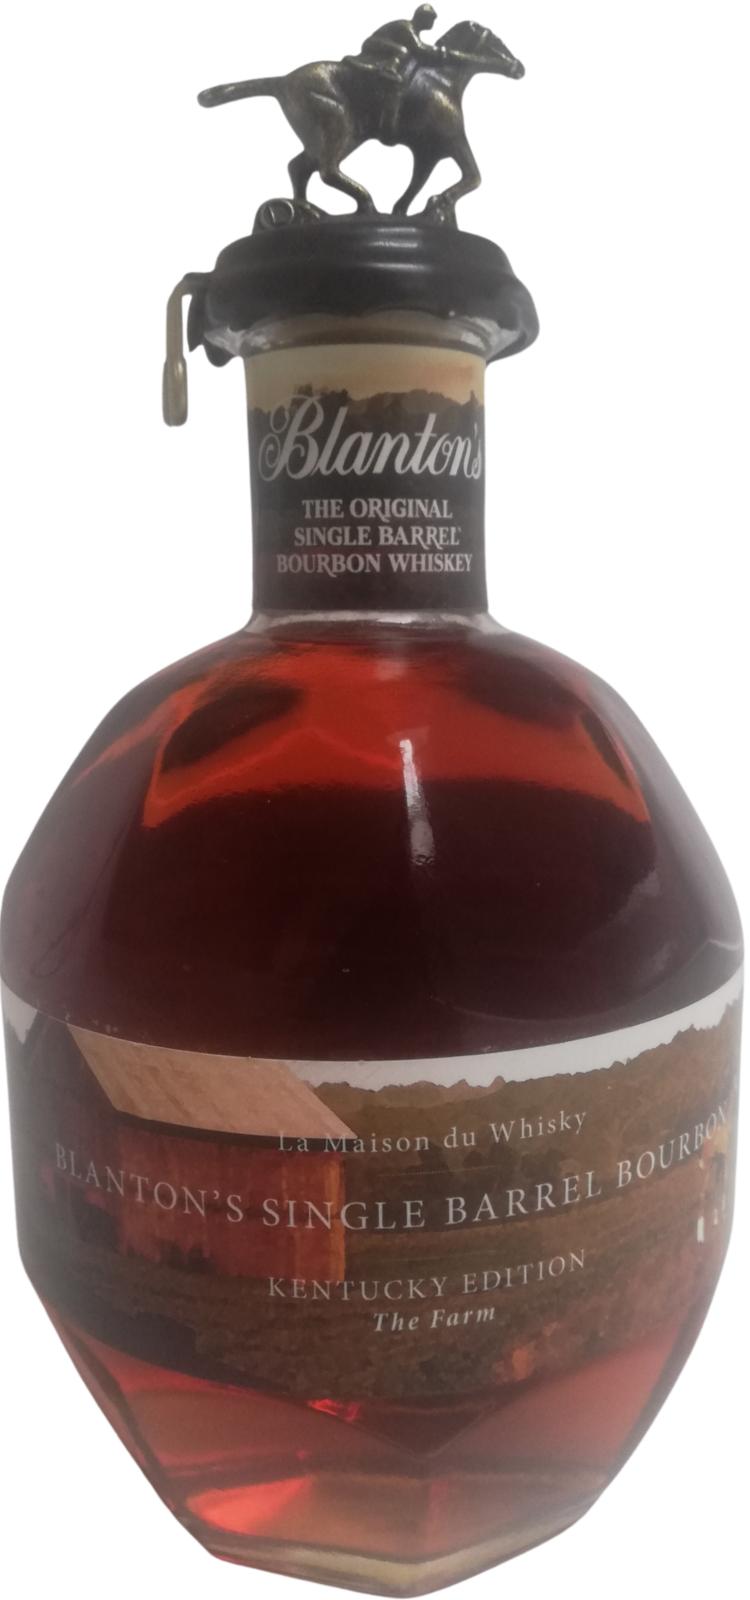 Blanton's Kentucky Edition The Farm La Maison du Whisky 49% 700ml